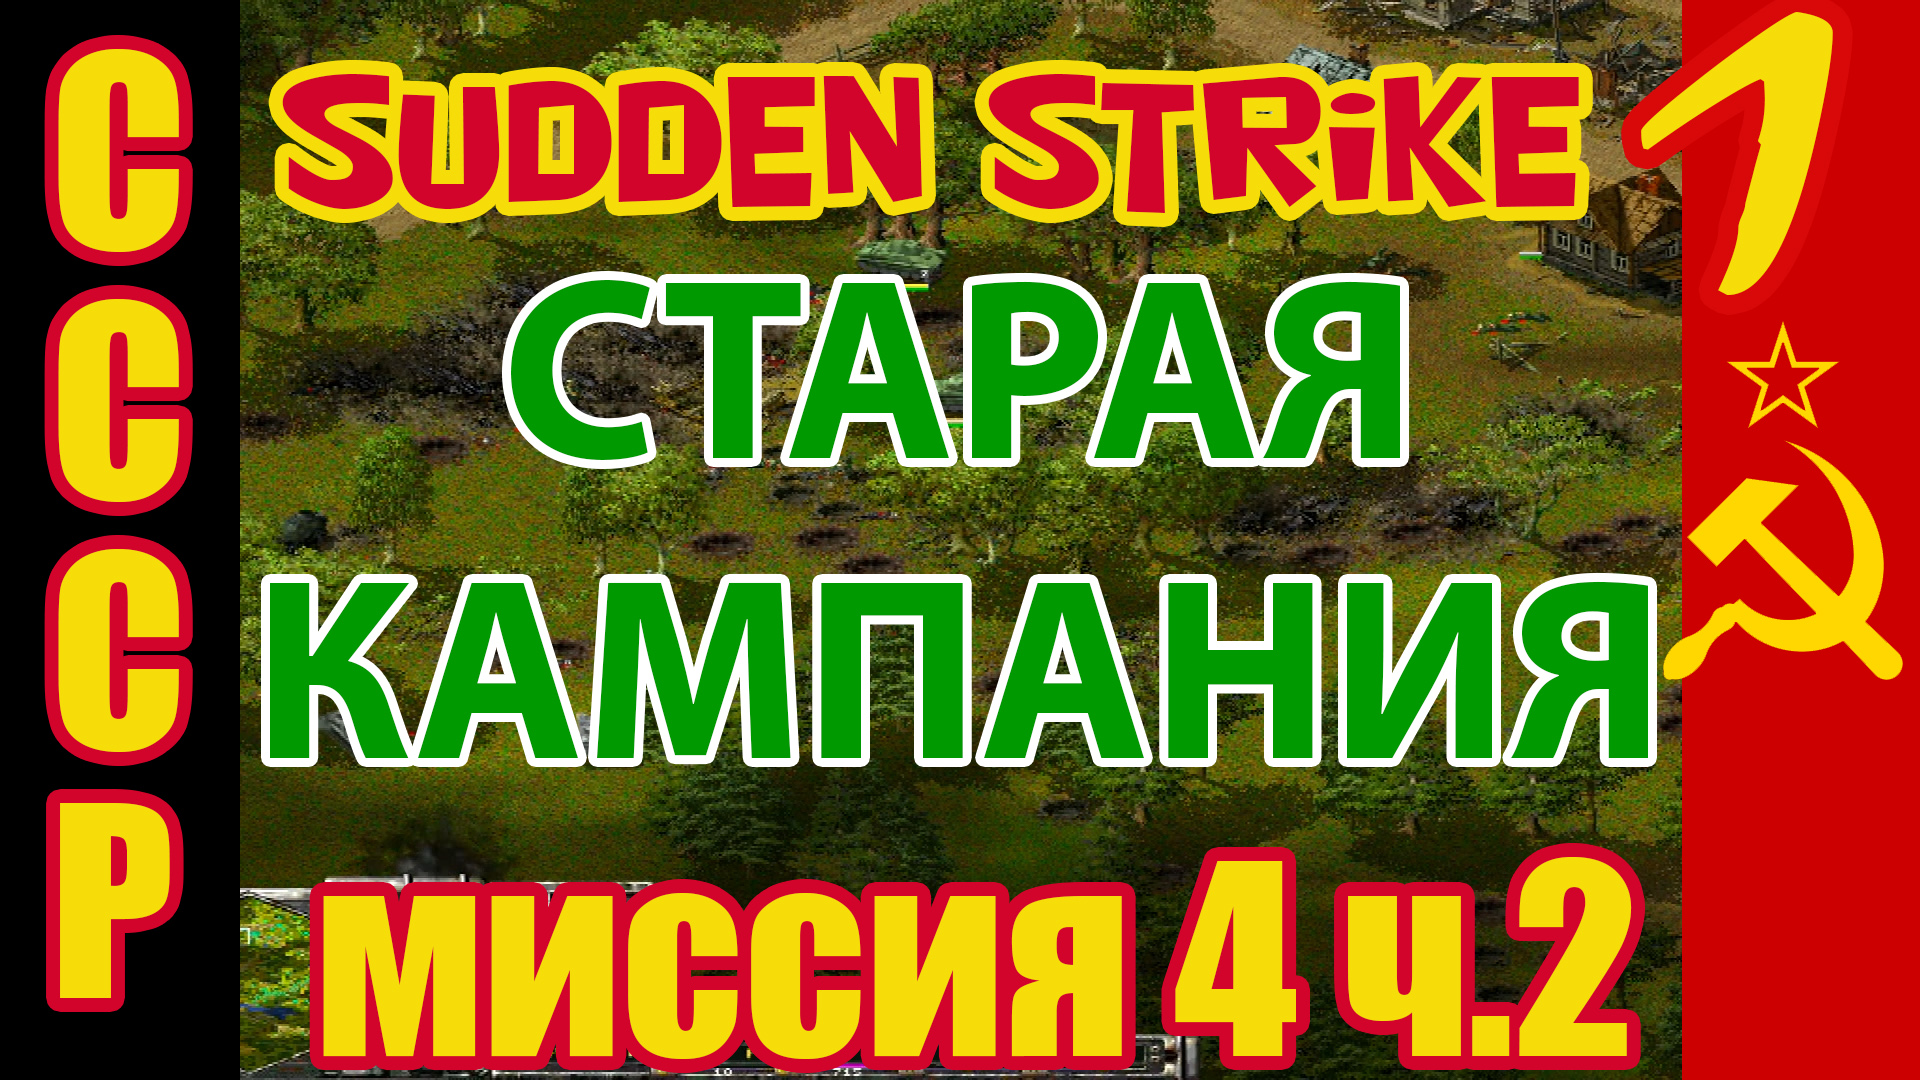 Противостояние 3 [Sudden Strike] прохождение кампания за СССР (Миссия №4  Ельня ) #2